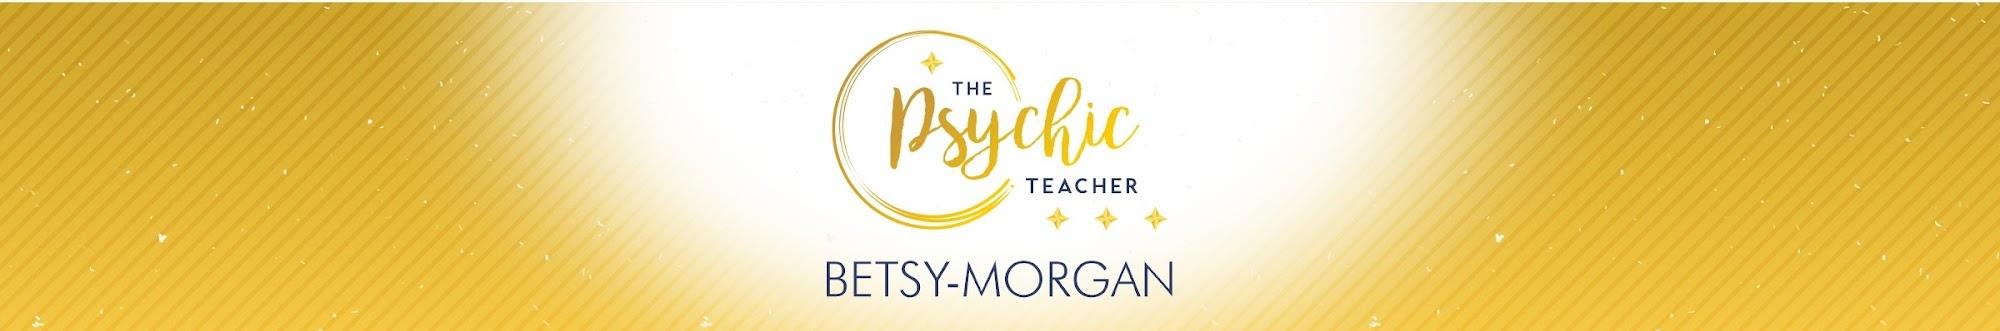 Betsy-Morgan The Psychic Teacher